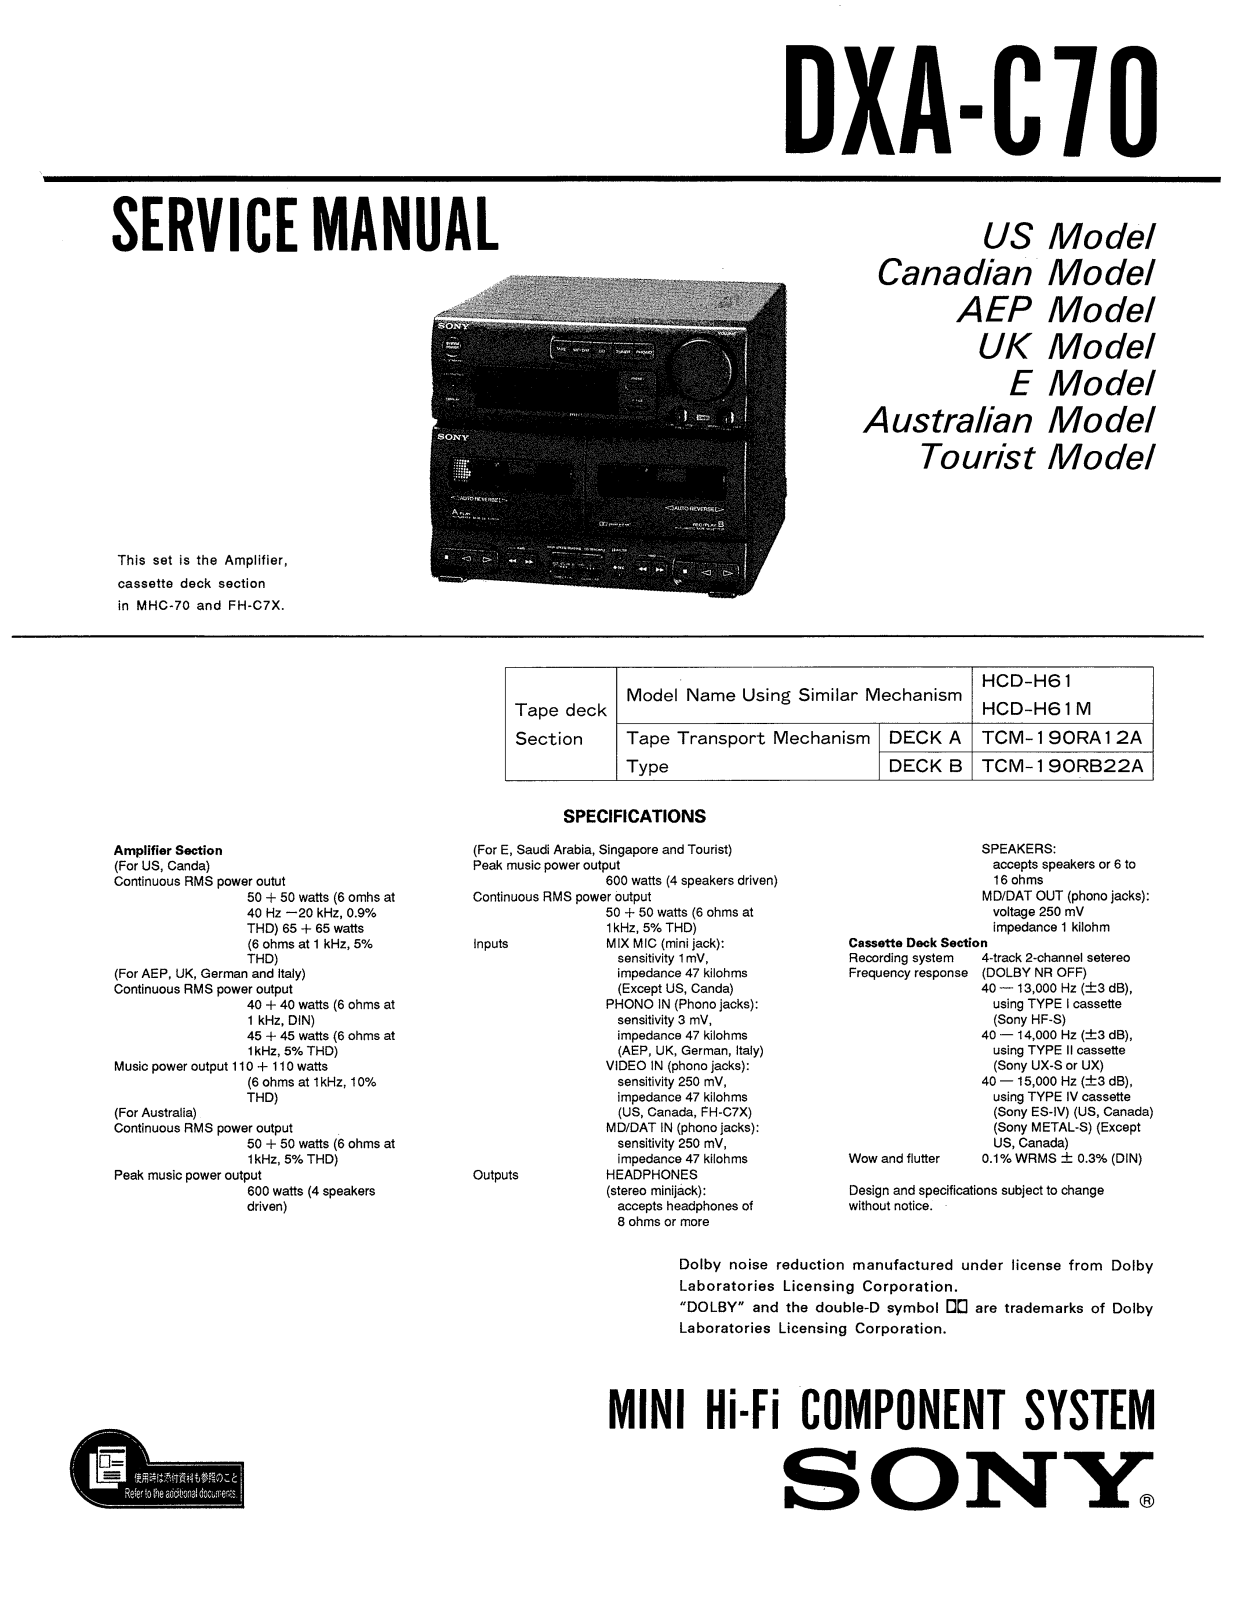 Sony DXAC-70 Service manual